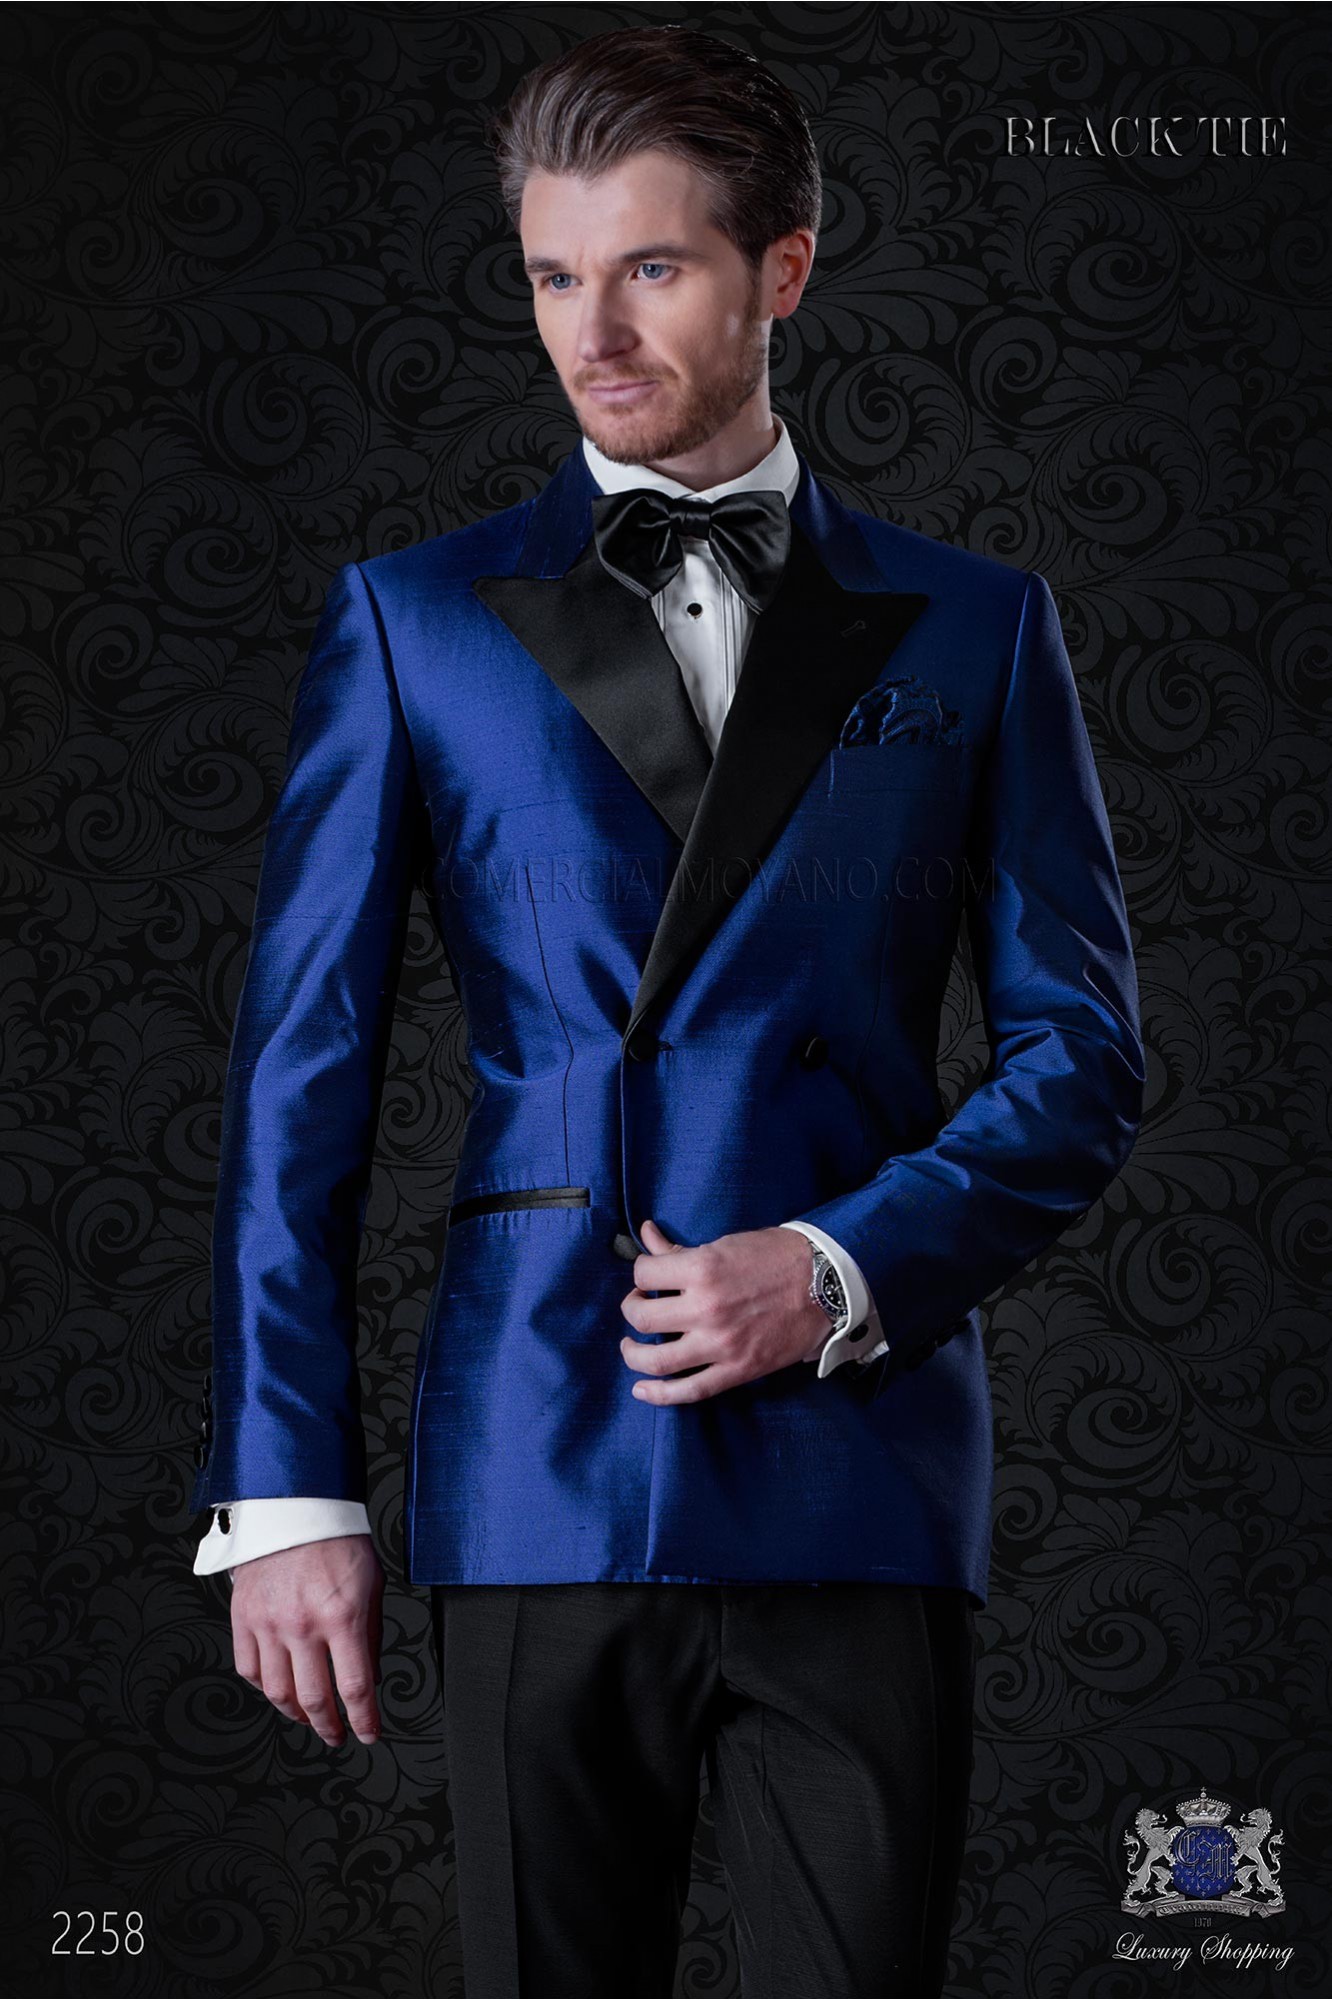 Esmoquin azul royal cruzado en shantung mixto seda modelo: 2258 Mario Moyano colección Black Tie